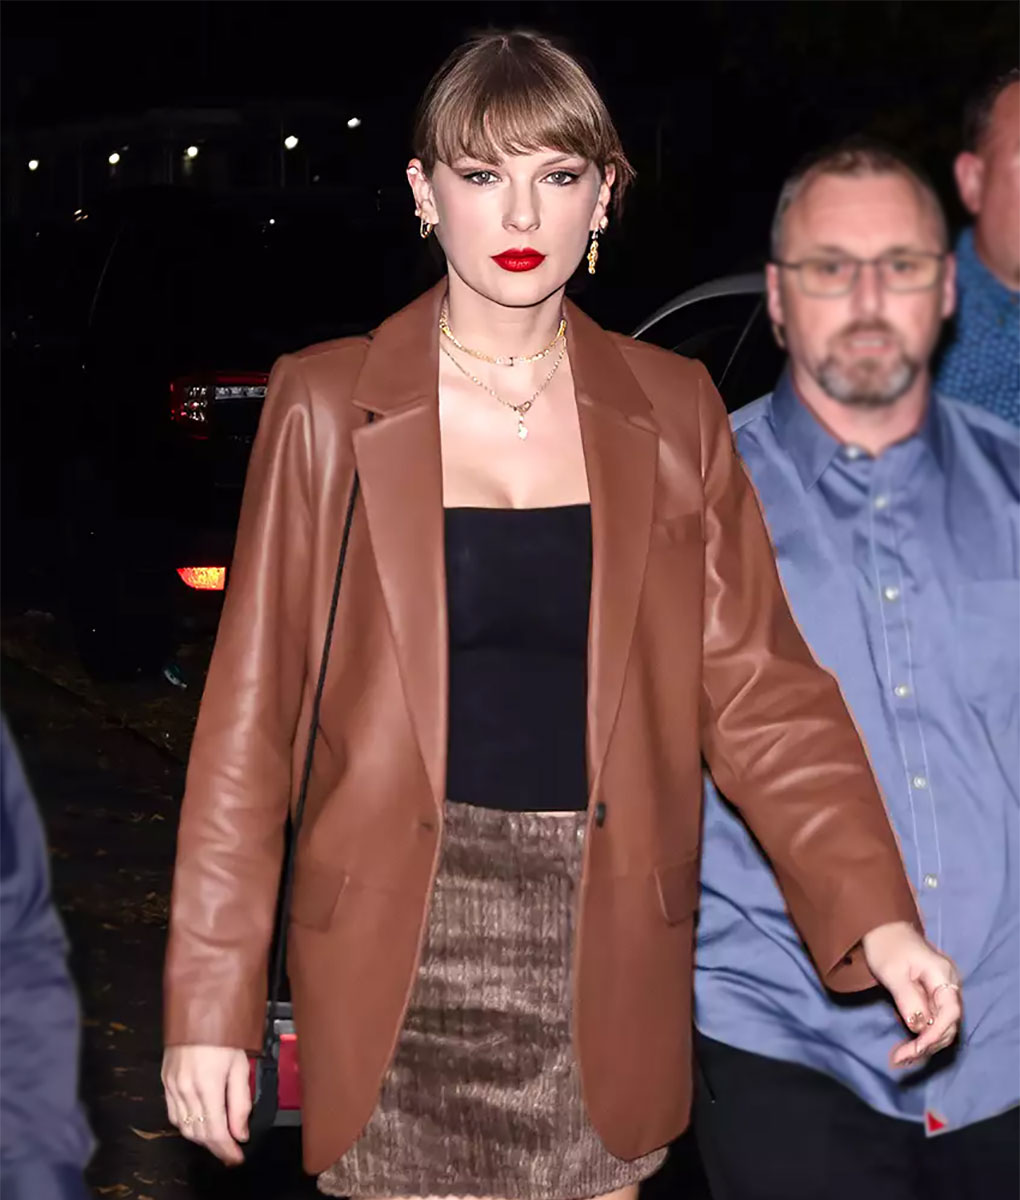 Taylor Swift 1989 Brown Leather Blazer-1